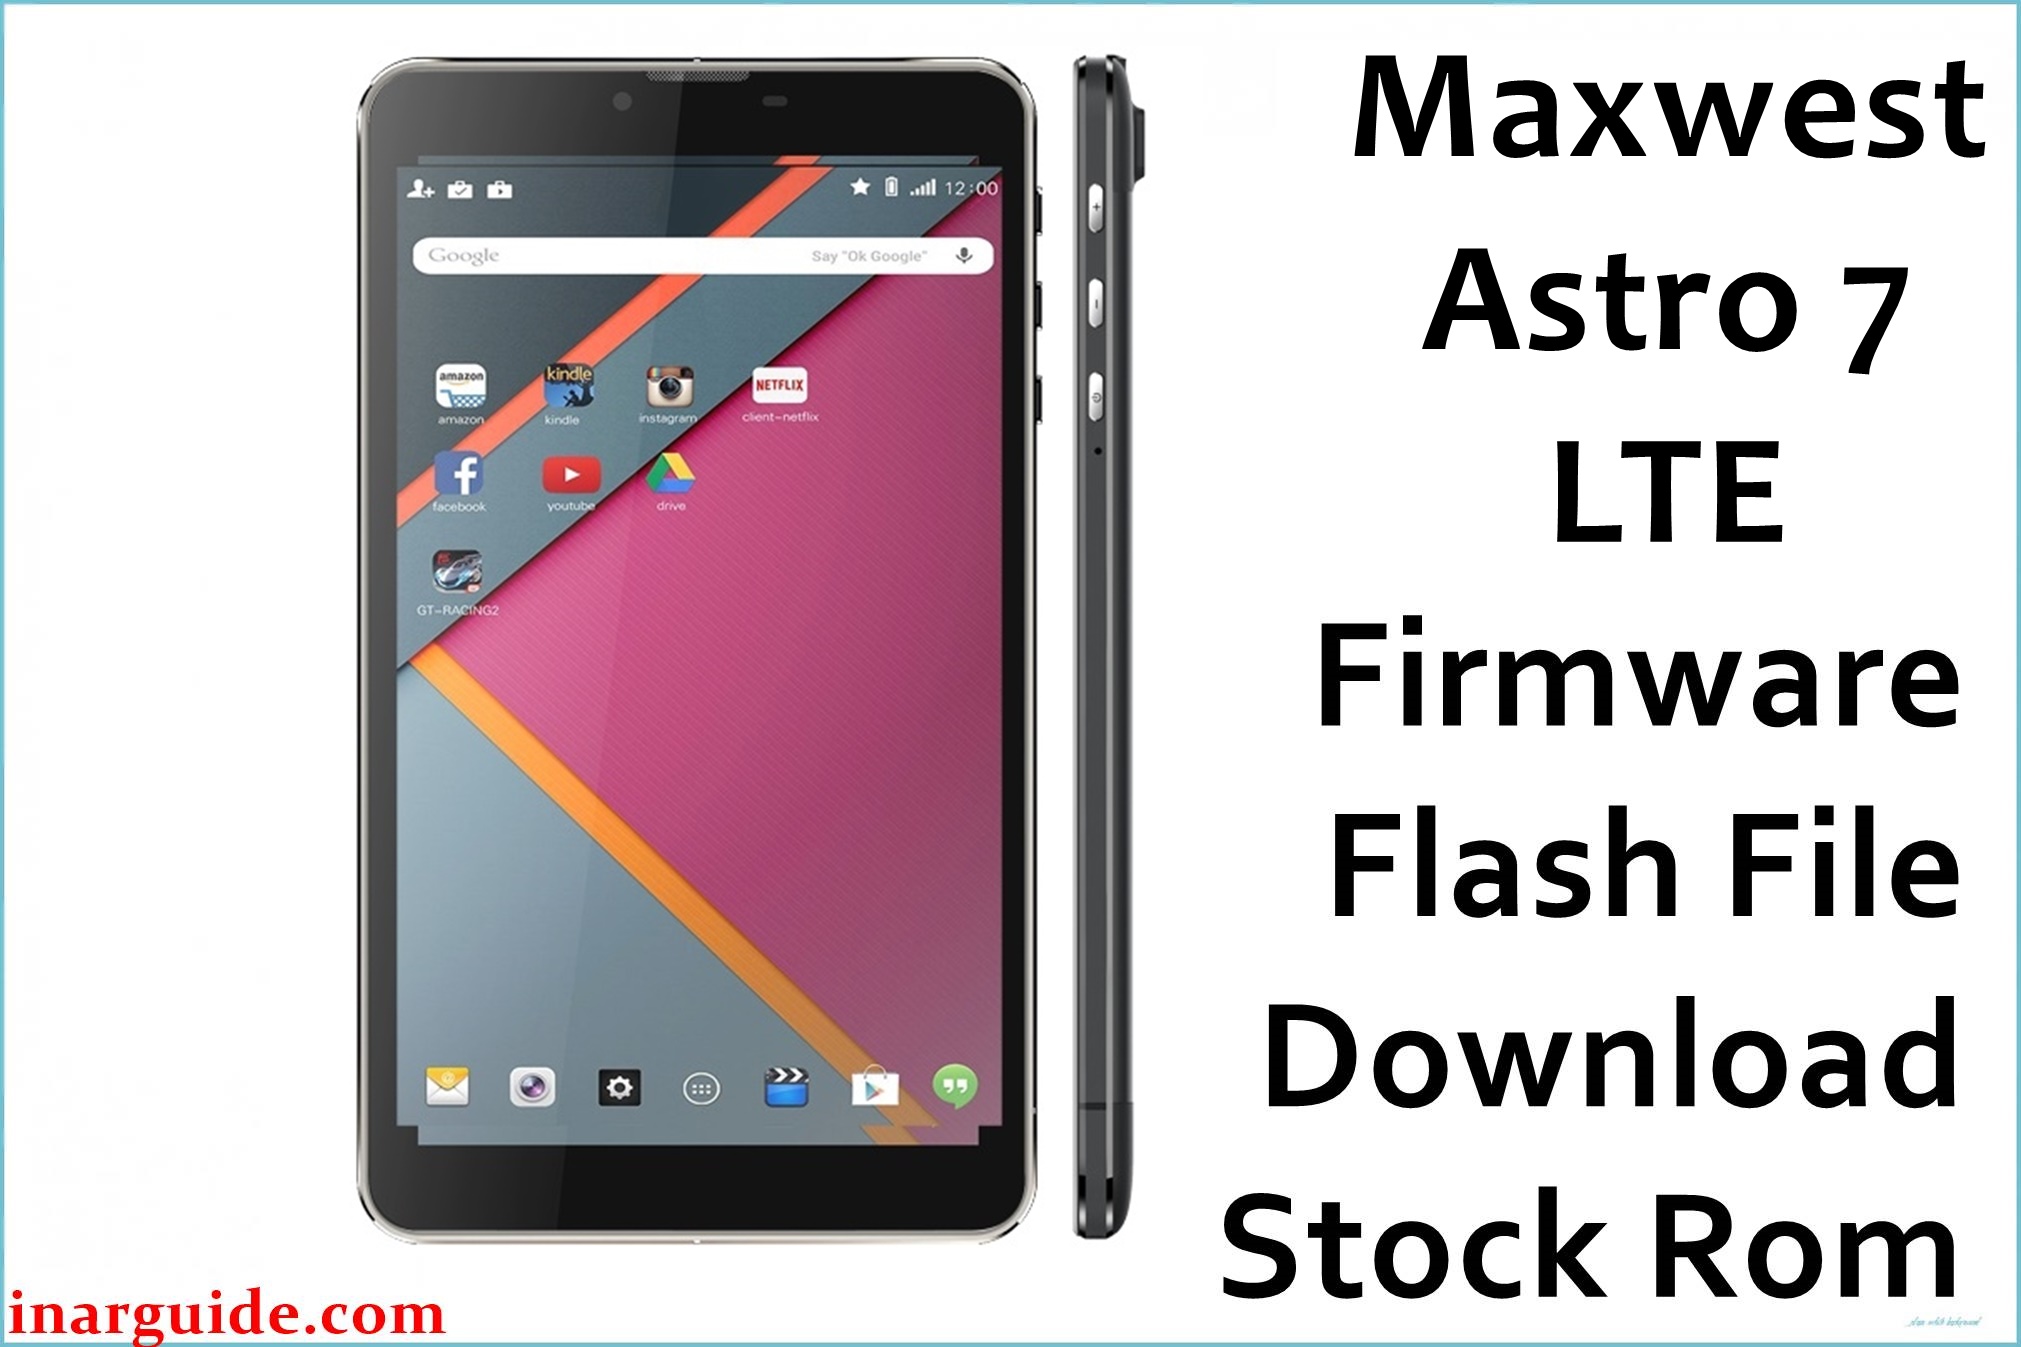 Maxwest Astro 7 LTE